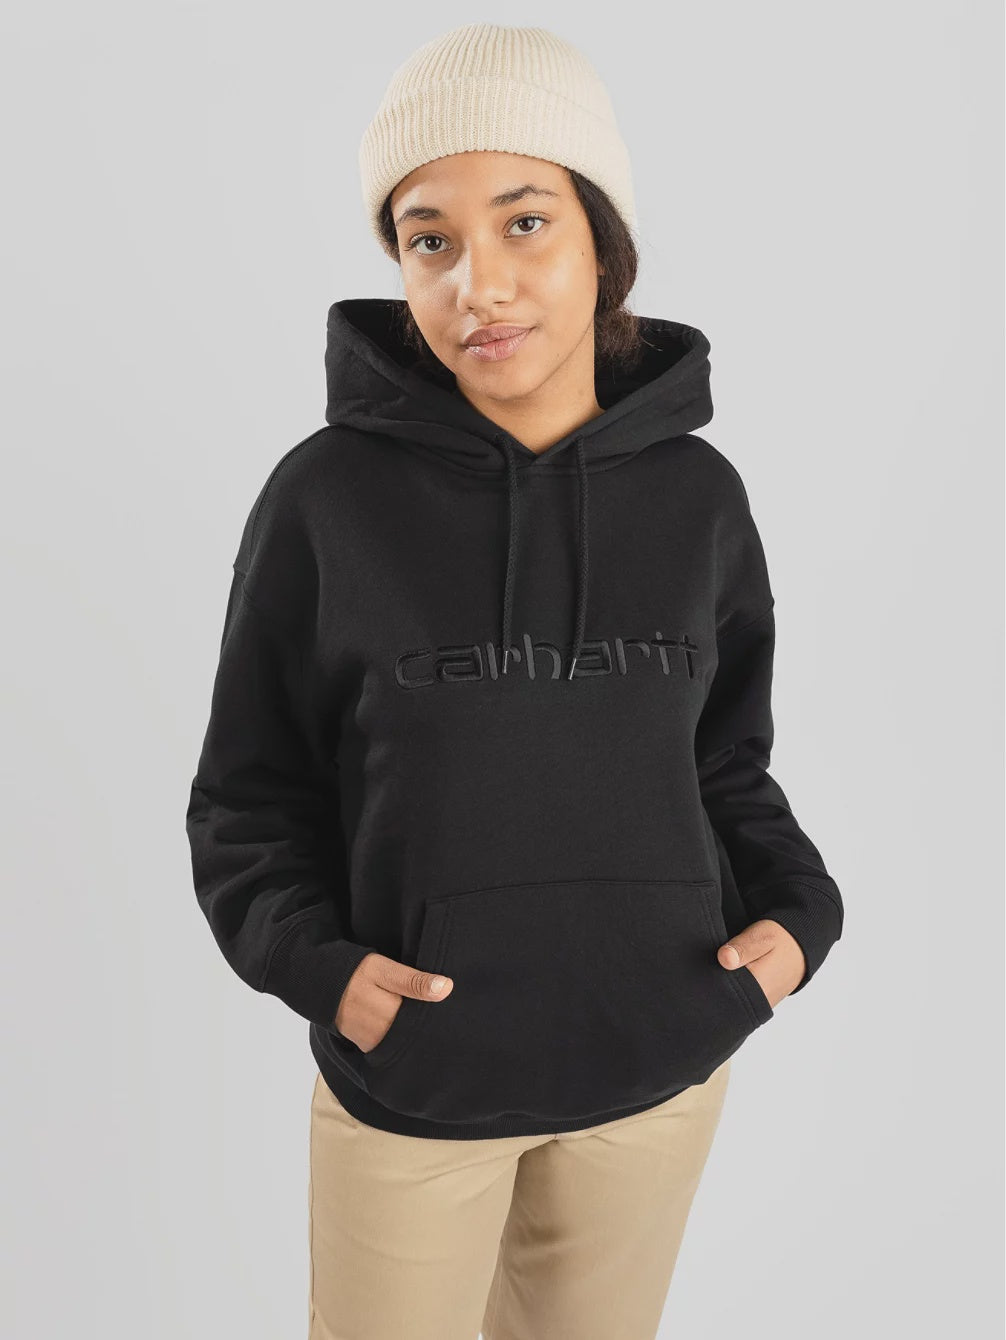 Carhartt W'Hooded Sweatshirt Black Black